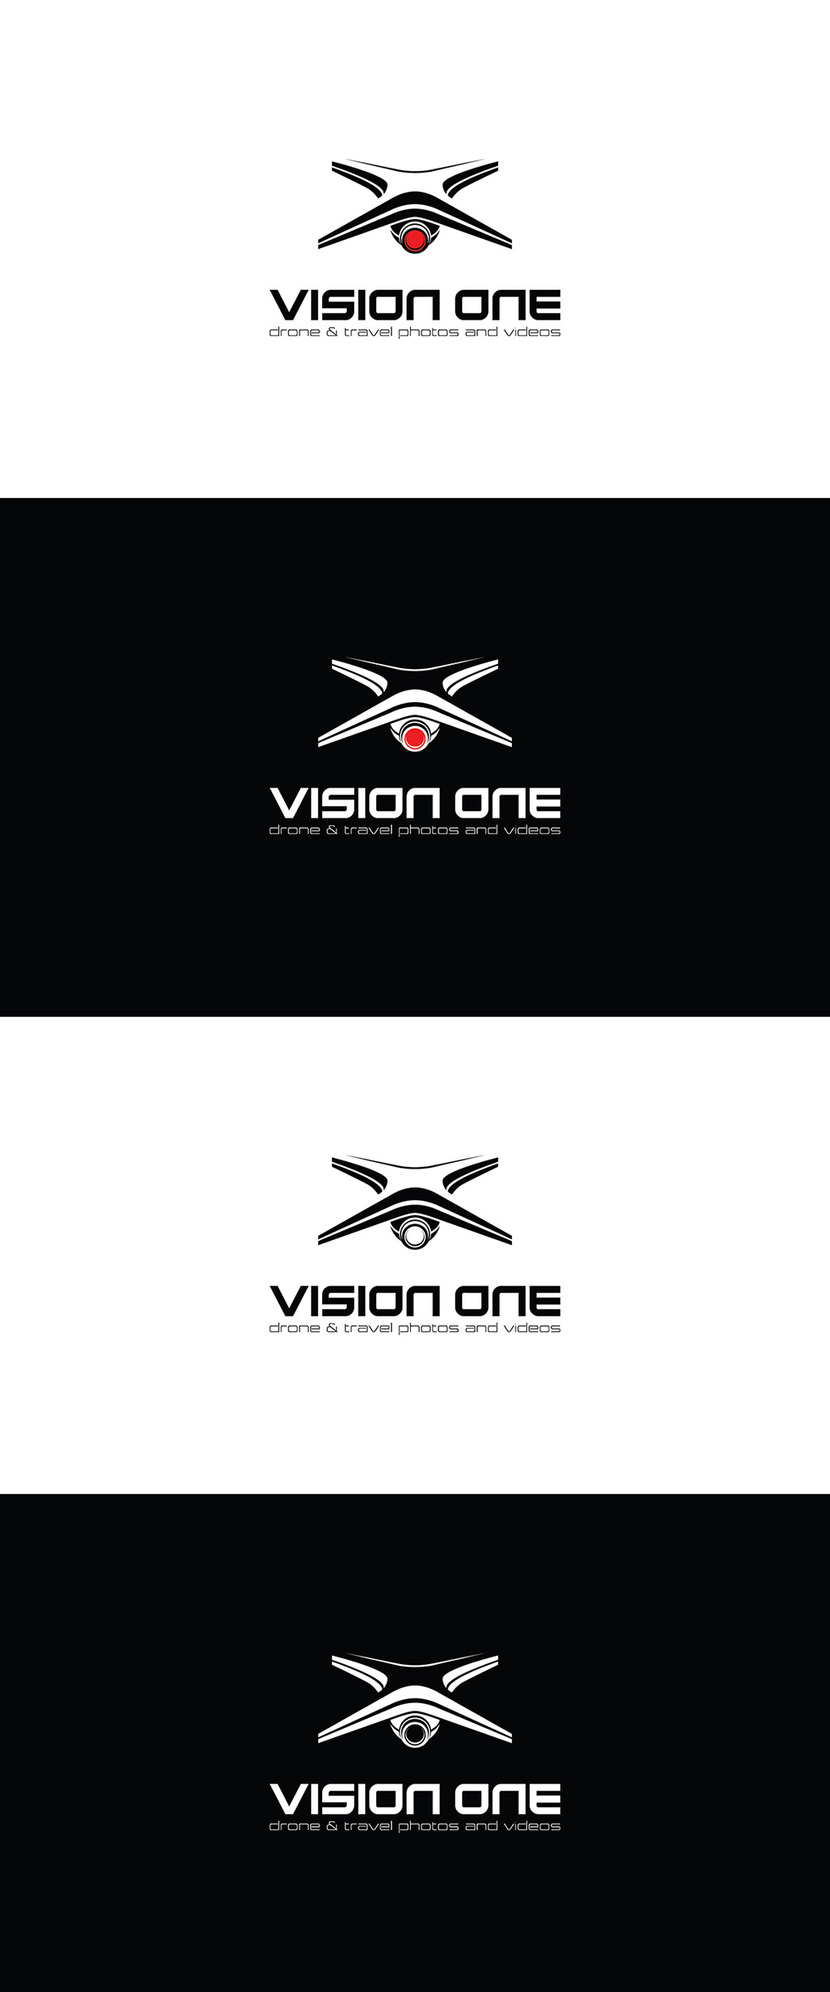 + - Разработка фирменного стиля проекта Vision One